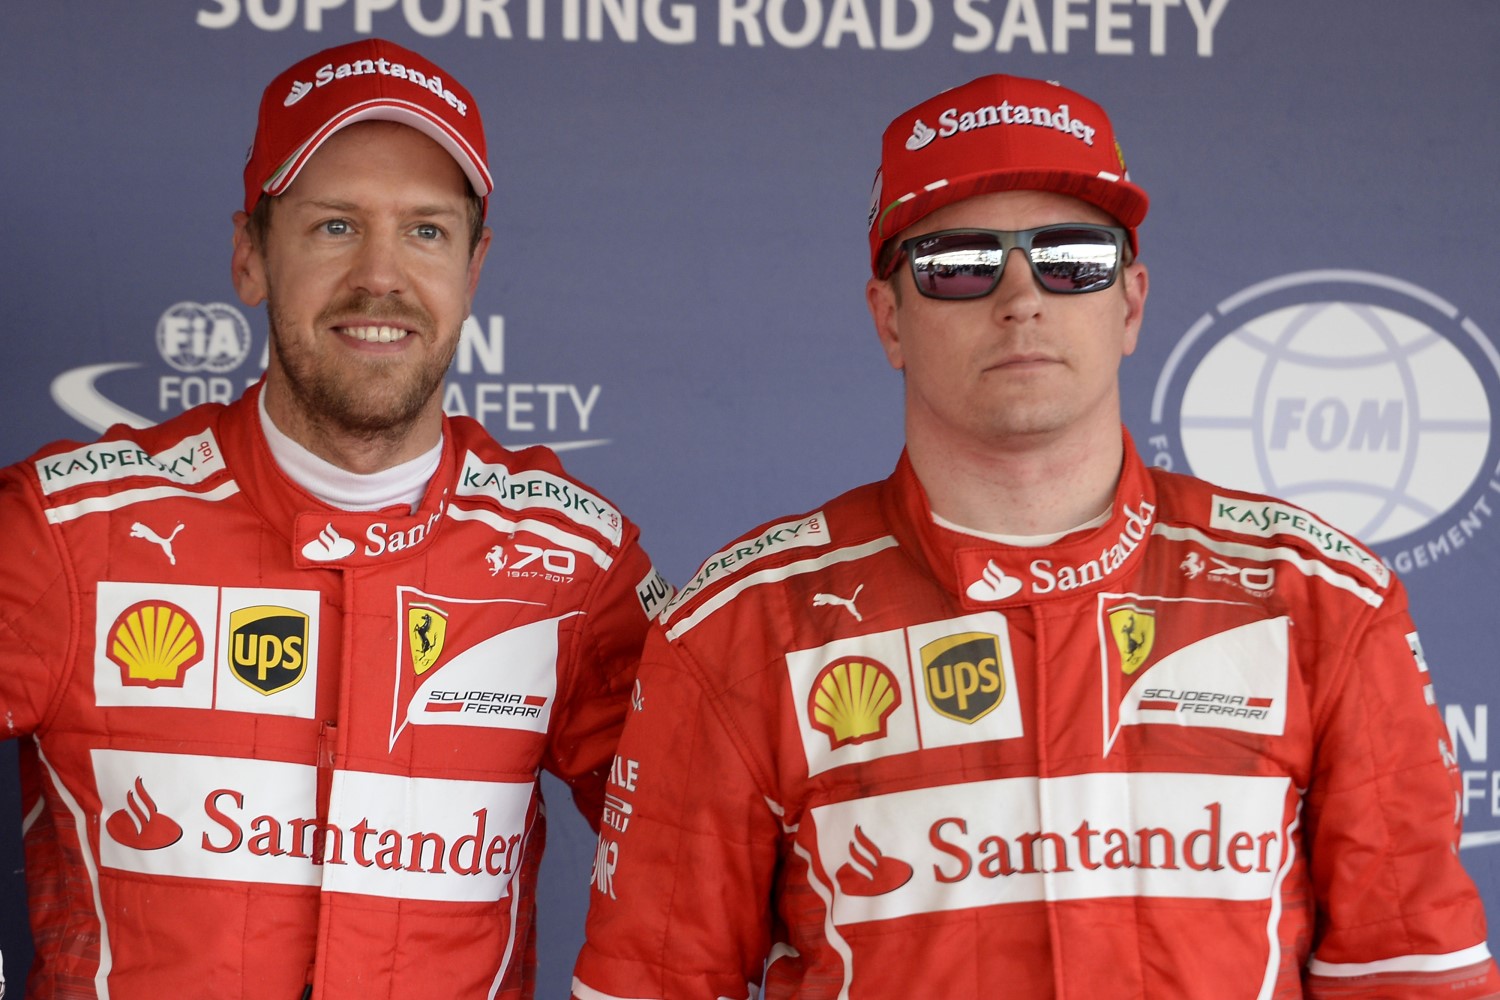 Vettel and Raikkonen will start 1-2